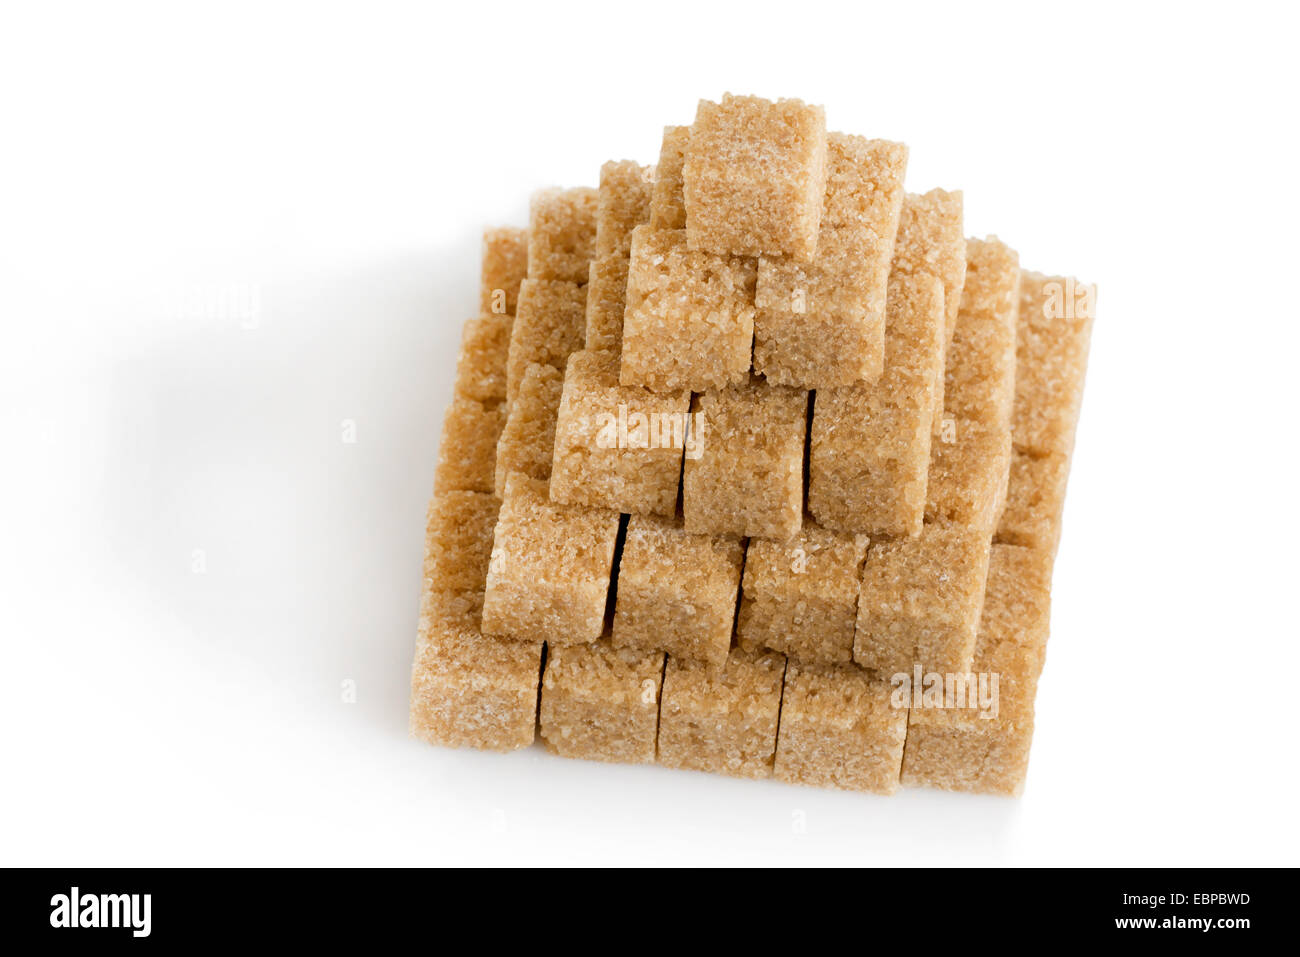 Pyramid of cane sugar cubes isolated on white background Stock Photo